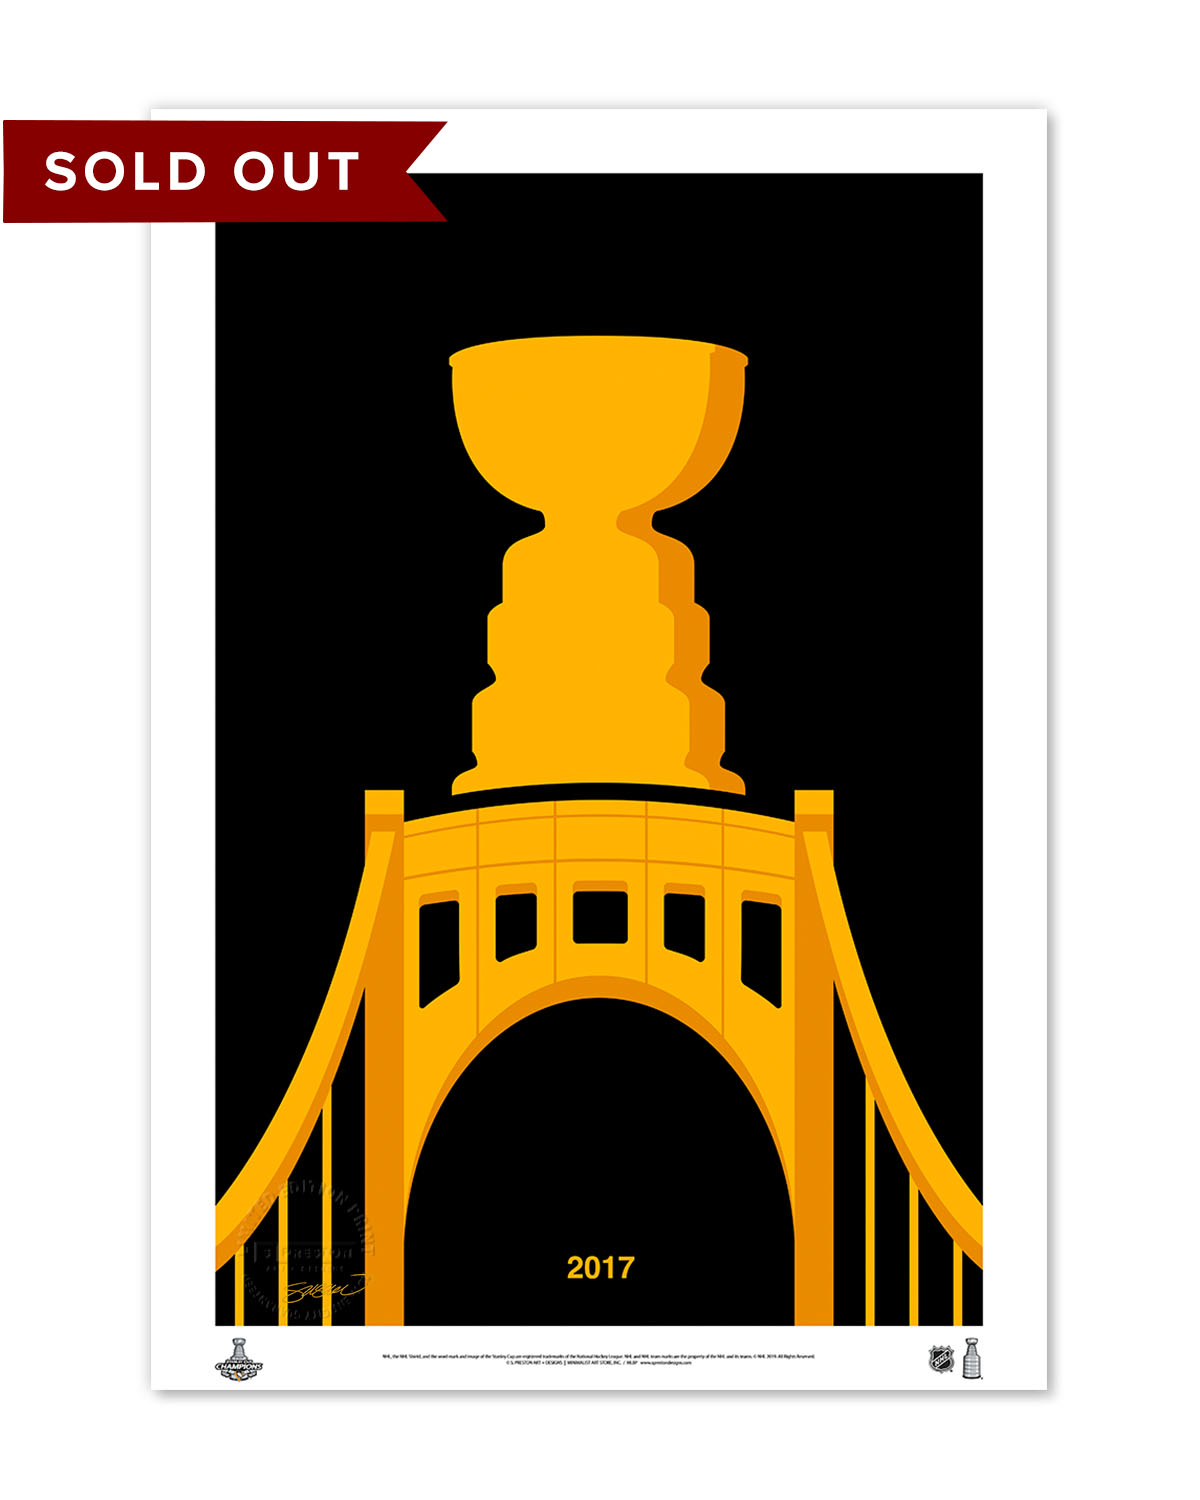 Minimalist Stanley Cup 2017 Limited Edition Fine Art Print